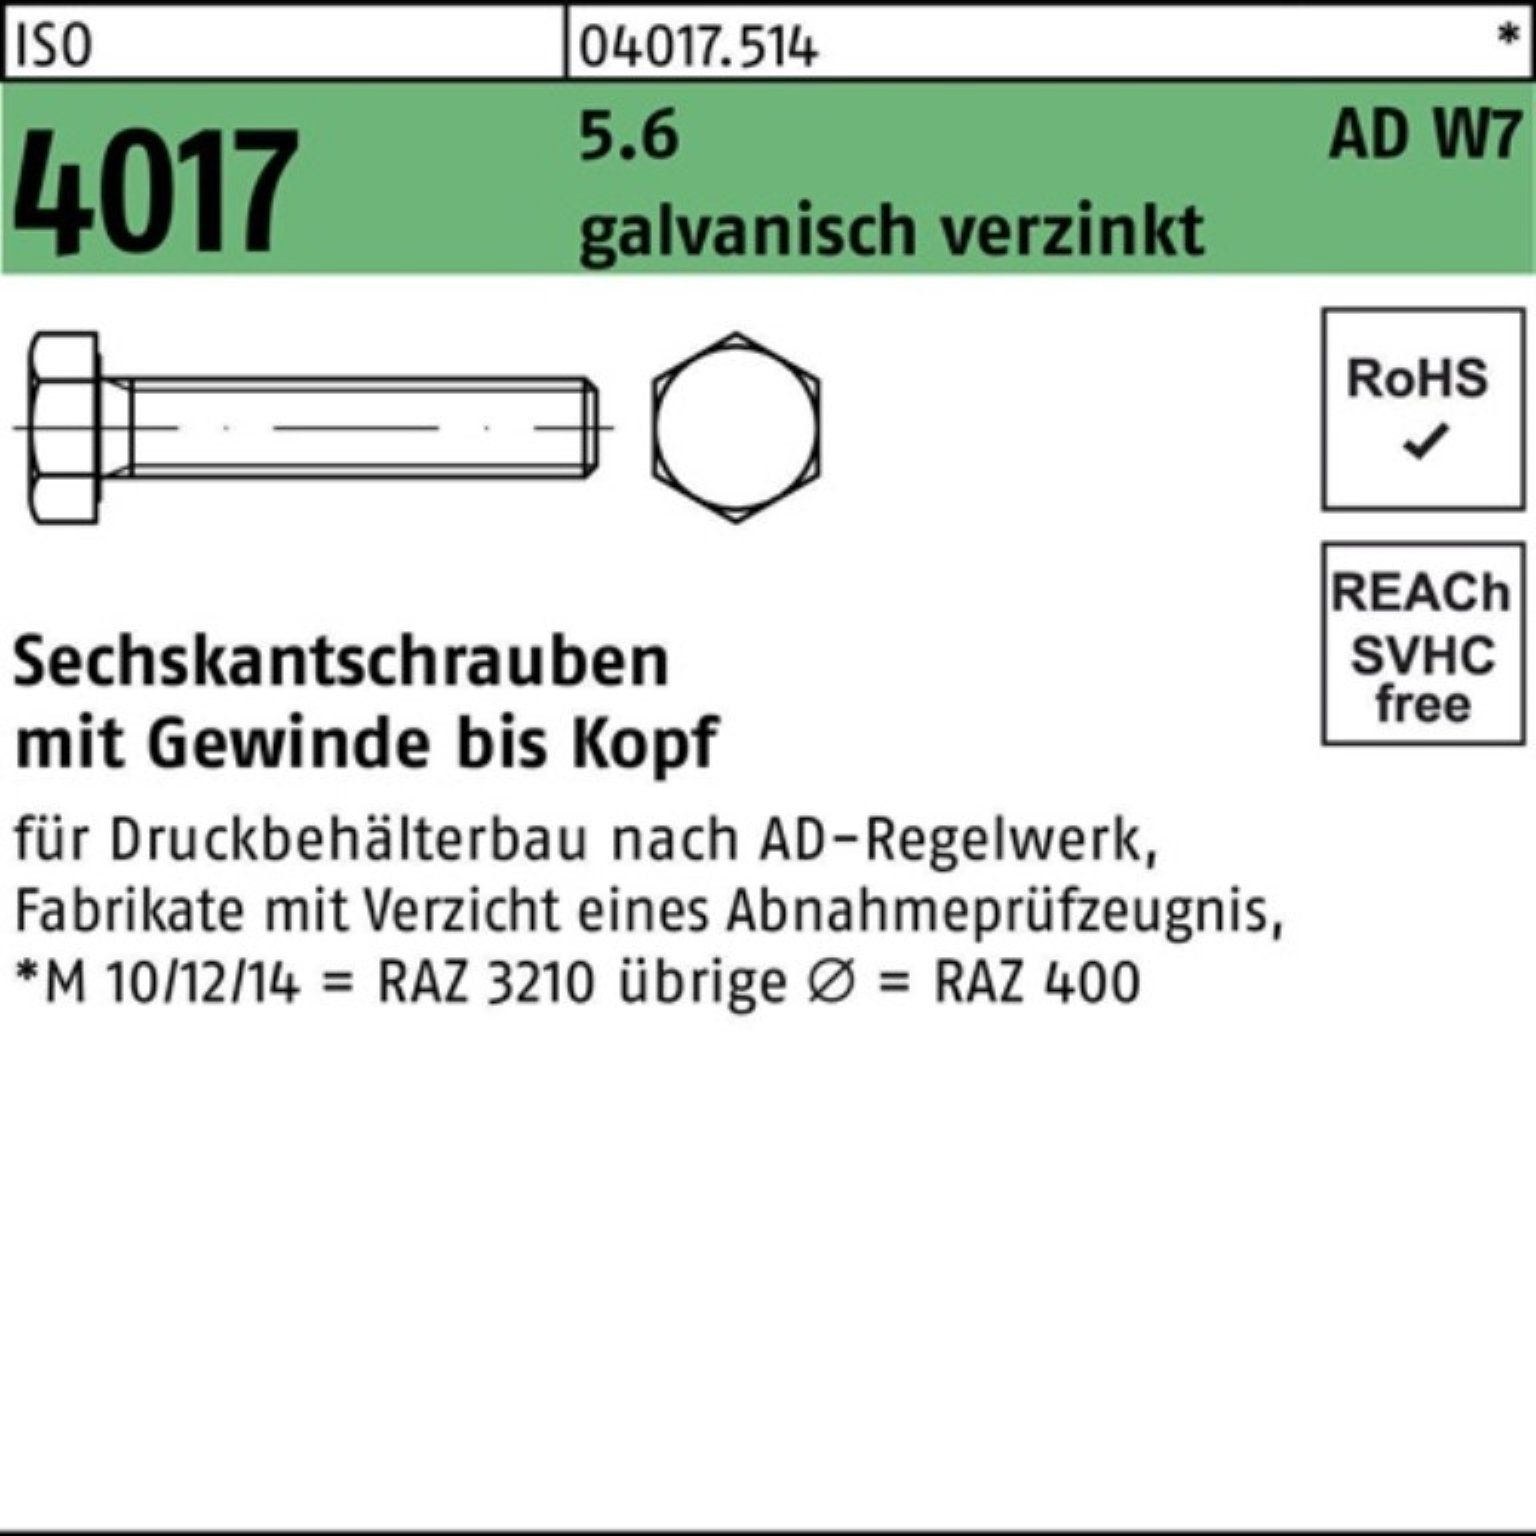 Sechskantschraube Bufab ISO Sechskantschraube M30x W7 100er AD galv.verz. 4017 Pack 100 VG 5.6